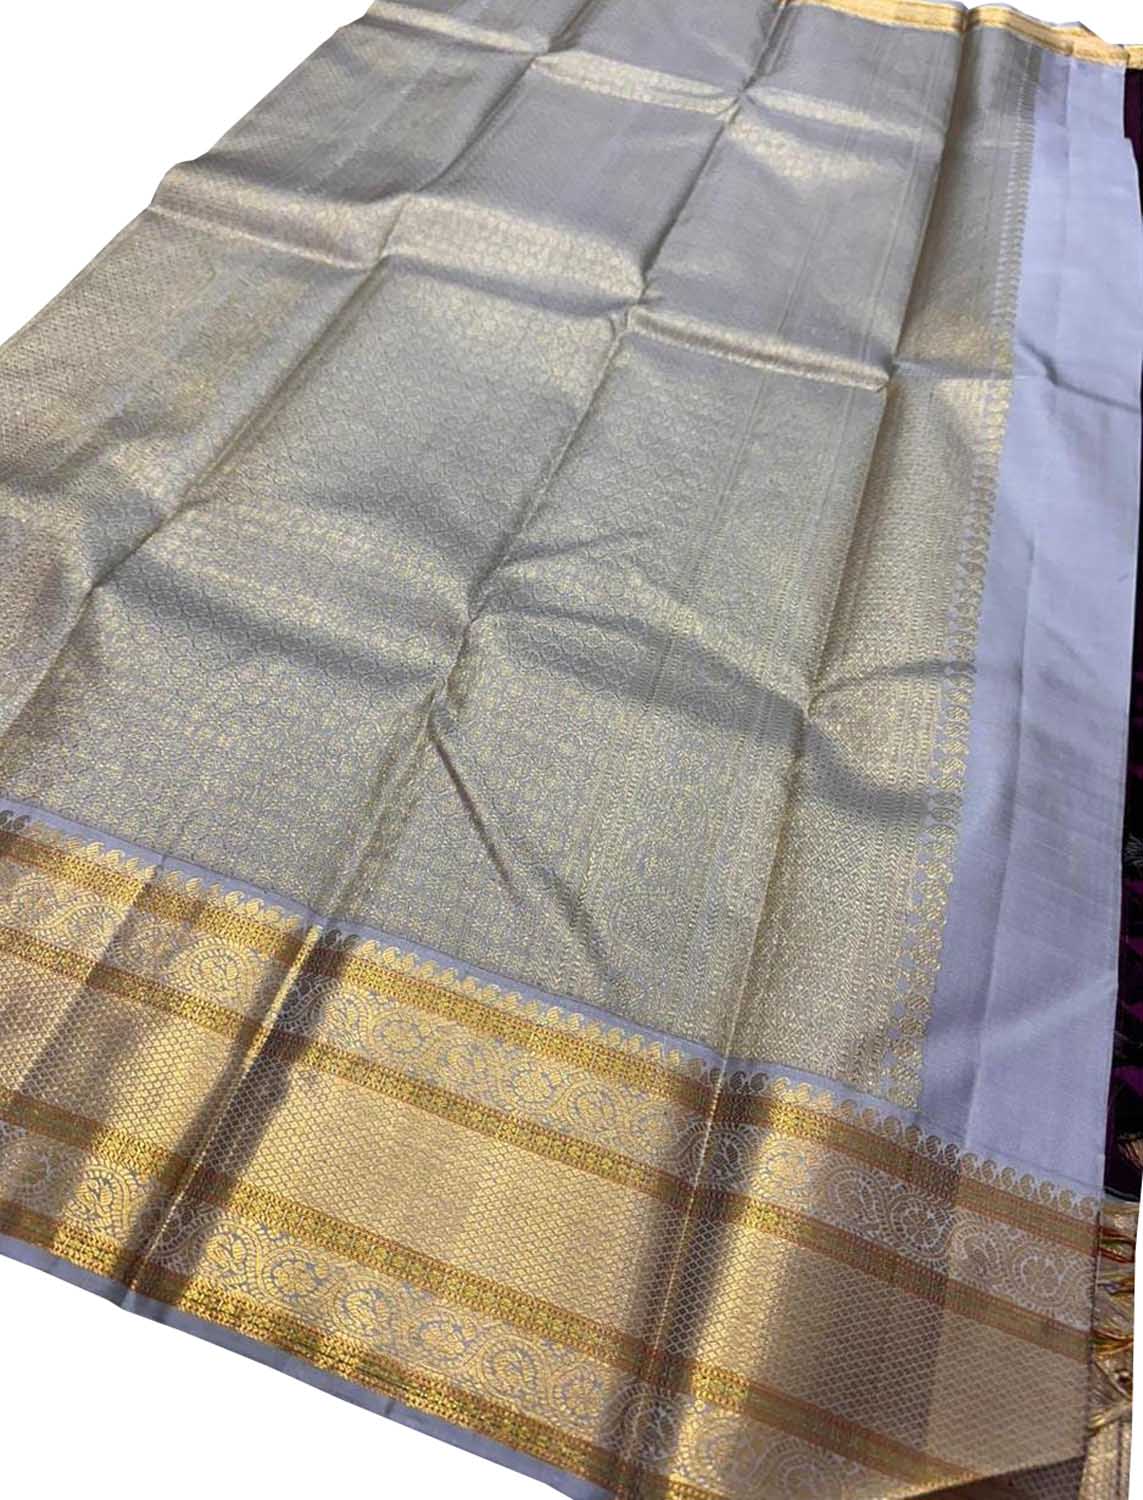 Exquisite Purple Kanjeevaram Handloom Pure Silk Saree: Timeless Elegance - Luxurion World